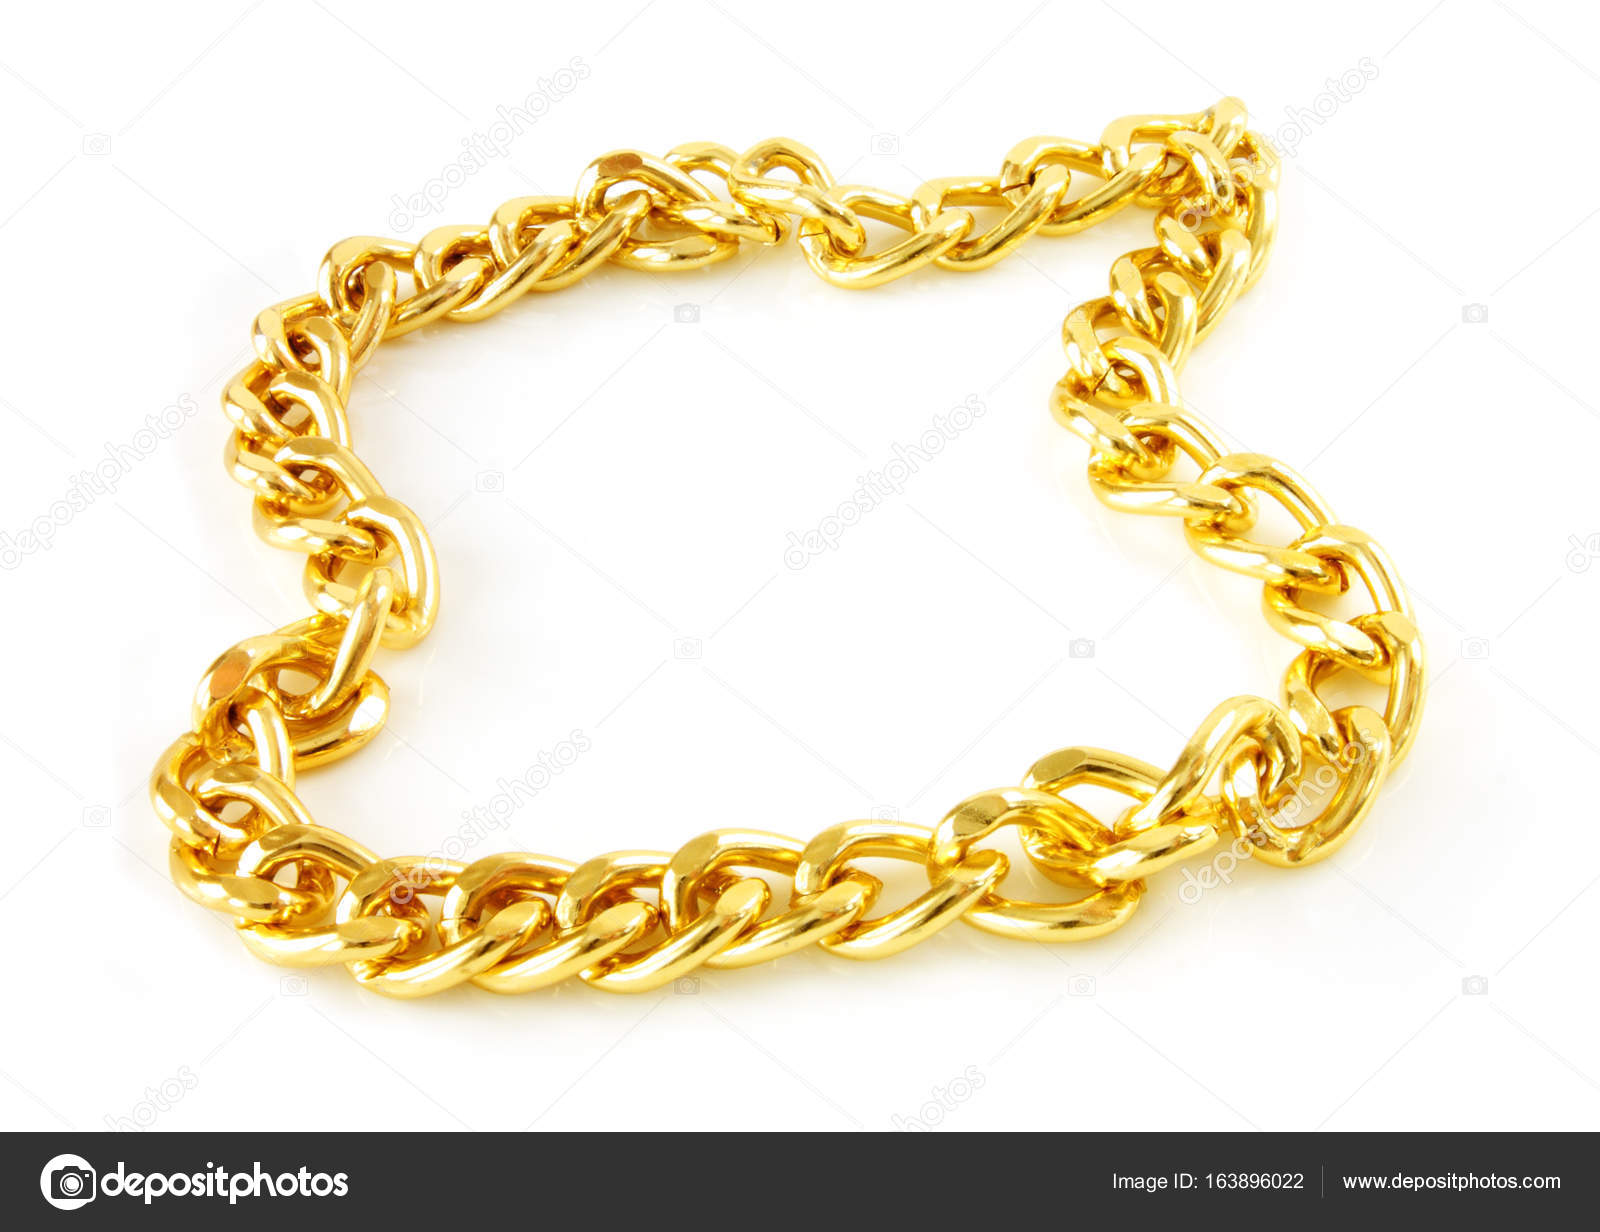 golden chain isolated — Stock Photo © nadi555 #163896022